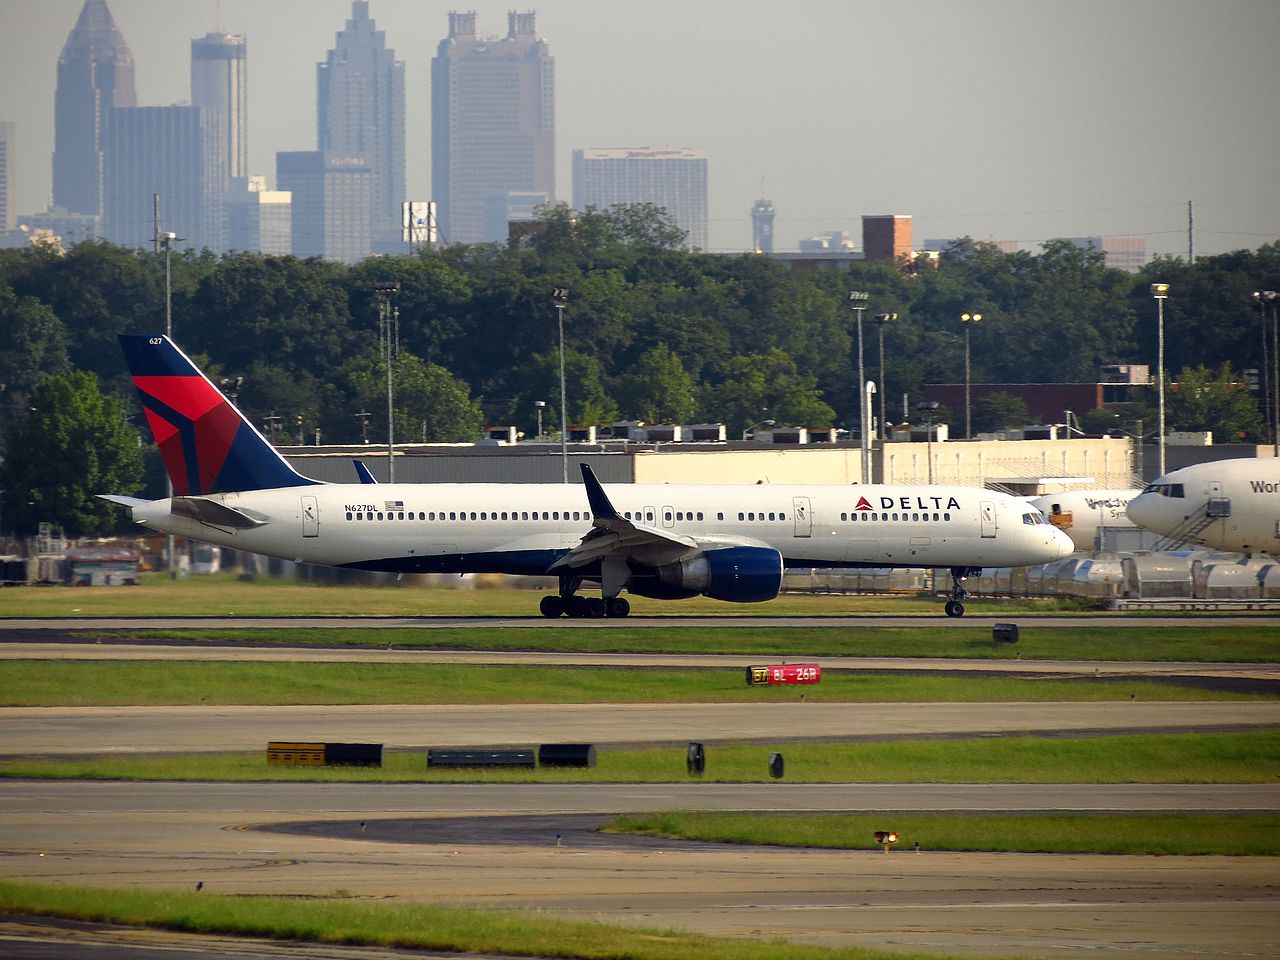 1280px-Delta_plane_and_Atlanta_skyline